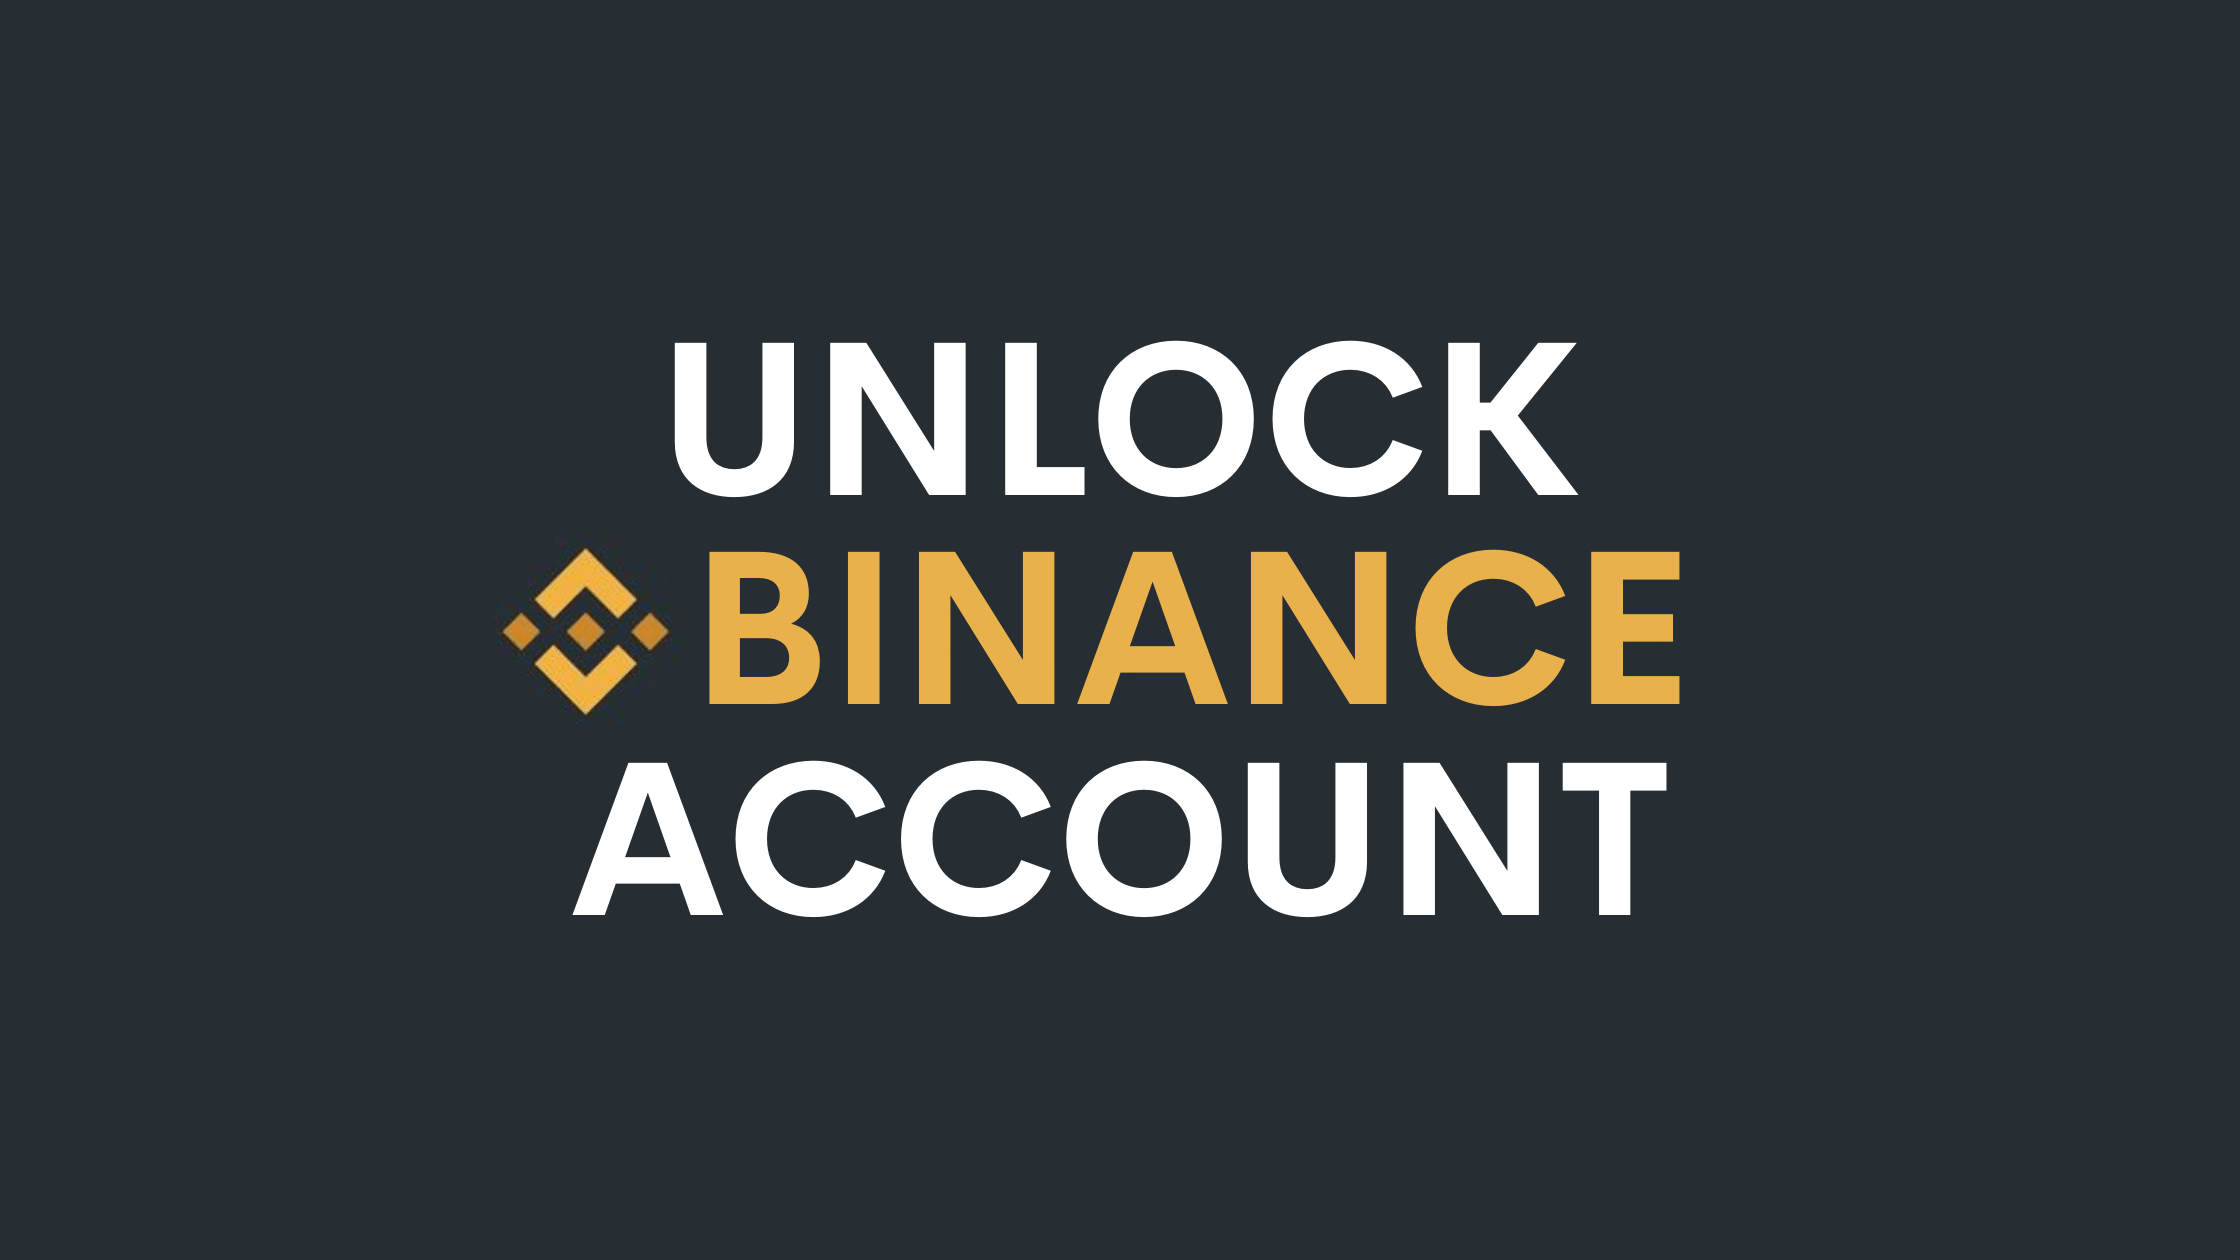 How to Unlock Binance Account Using Website